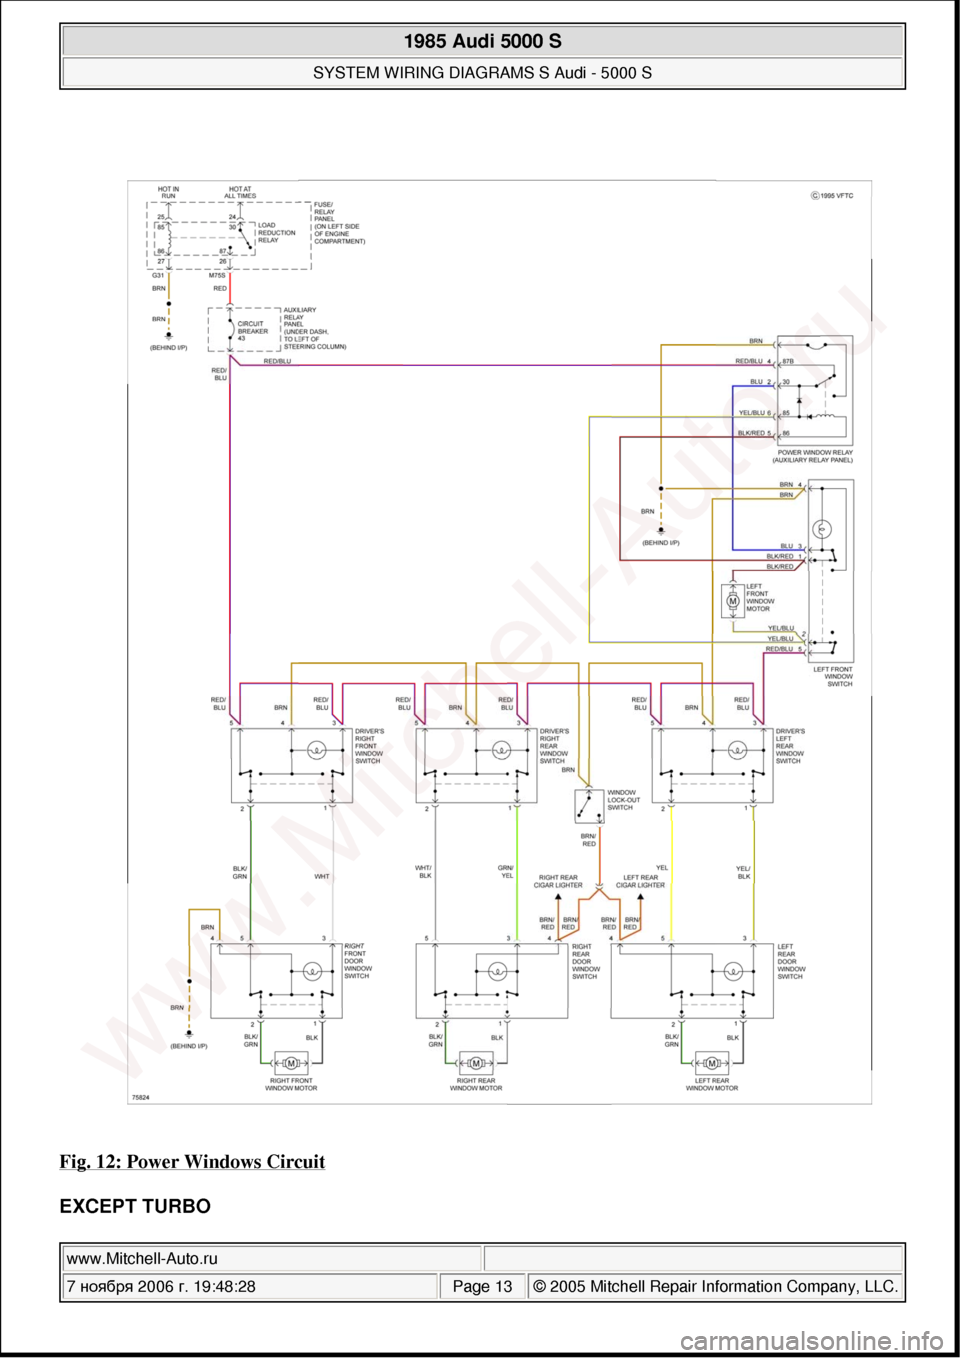 AUDI 5000S 1985 C2 System Wiring Diagram 
Fig. 12: Power Windows Circuit 
EXCEPT TURBO 
 
1985 Audi 5000 S 
SYSTEM WIRING DIAGRAMS S Audi - 5000 S  
www.Mitchell-Auto.ru  
7  ноября  2006 г. 19:48:28Page 13 © 2005 Mitchell Repair Inf